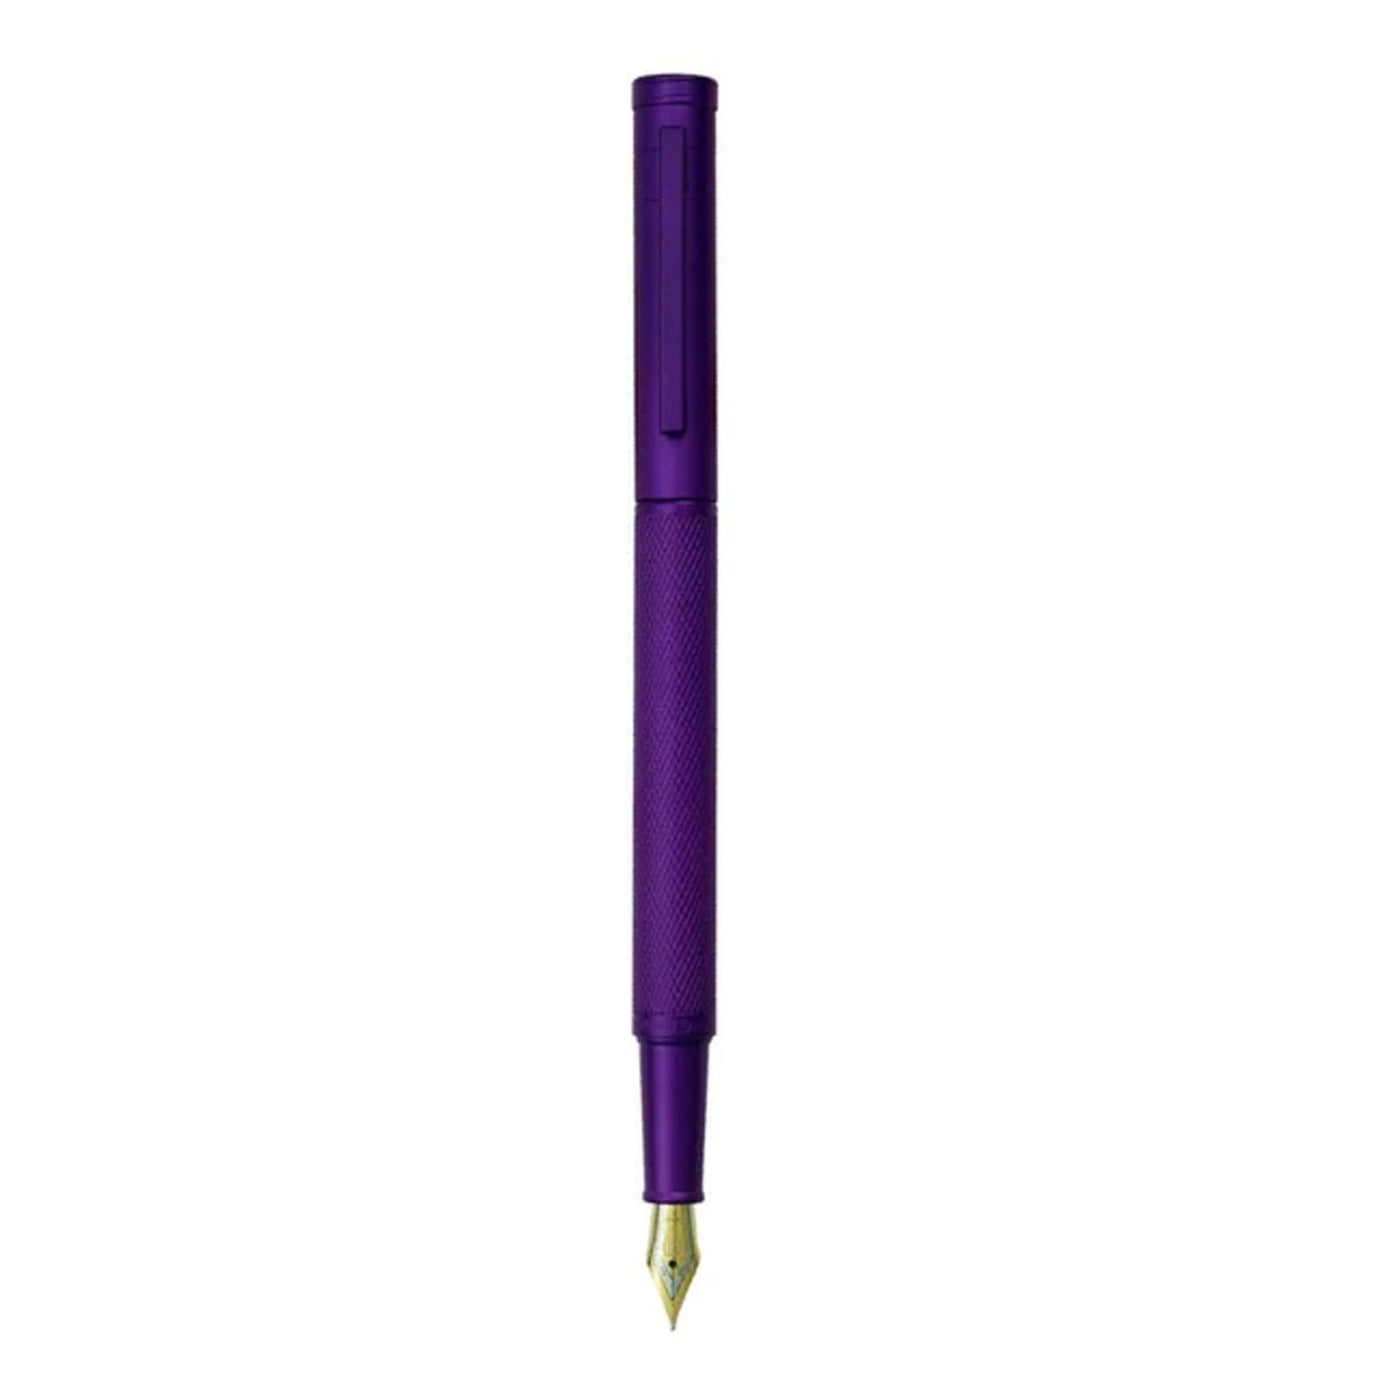 Hongdian 1851 Fountain Pen - Violet 4